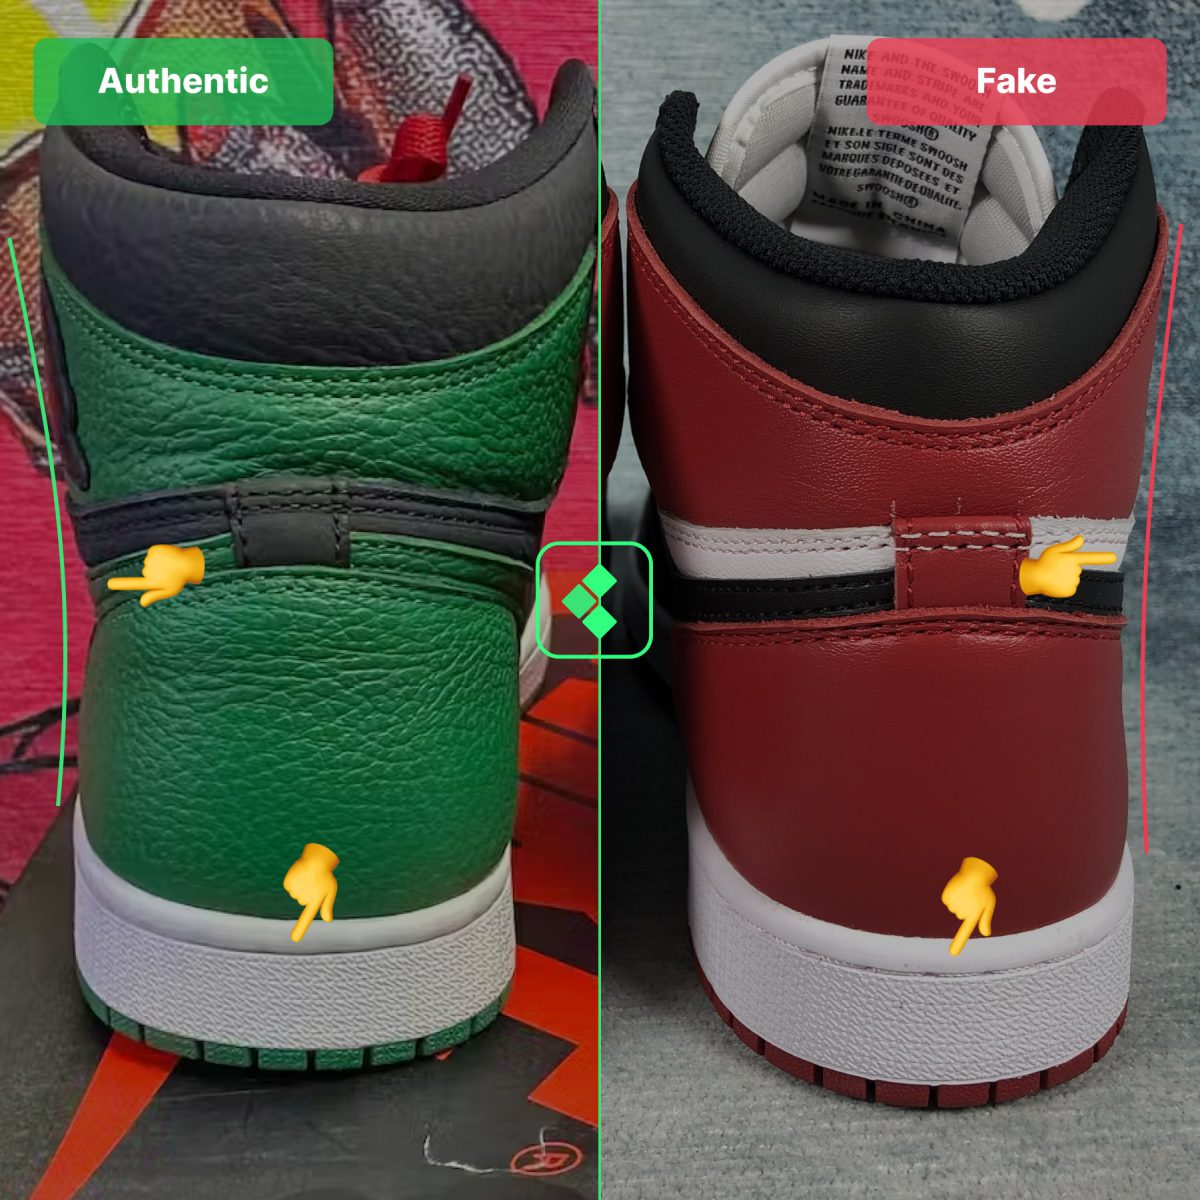 Jordan 1 GS Fake Vs Real Comparison - Shape From The Back